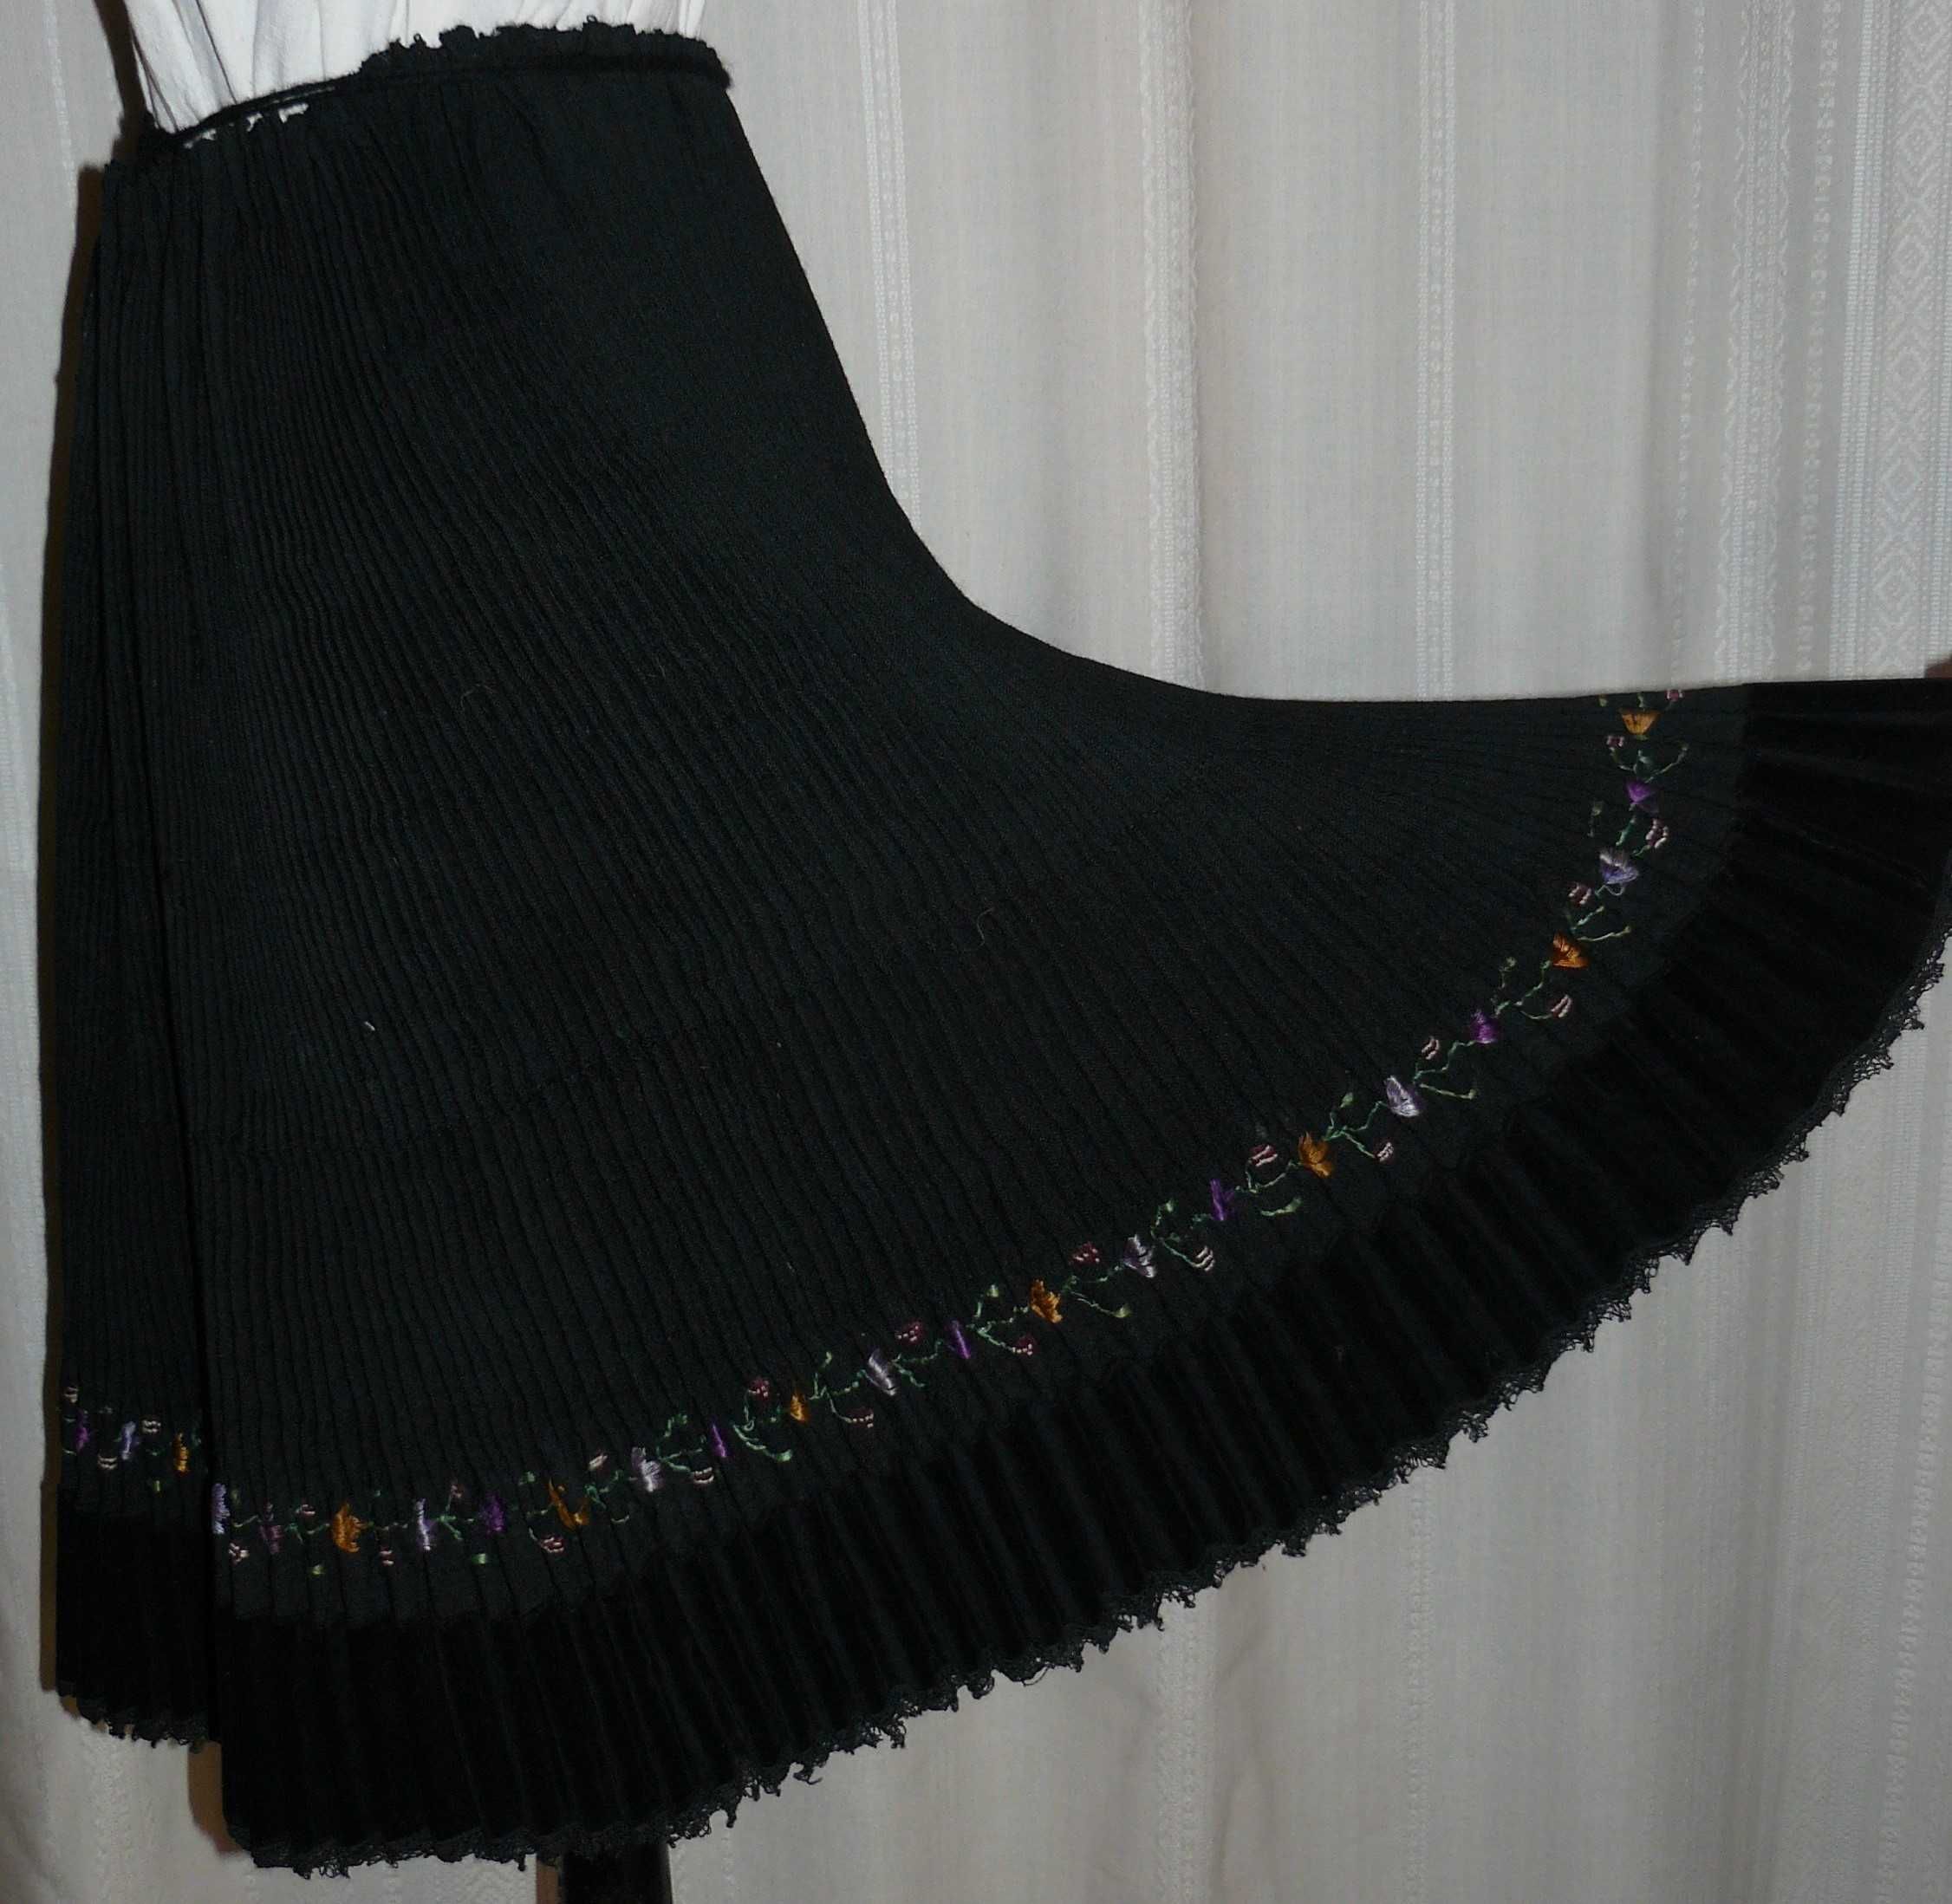 Български народни носии- Северняшки бръчник, пищимали, задна престилка